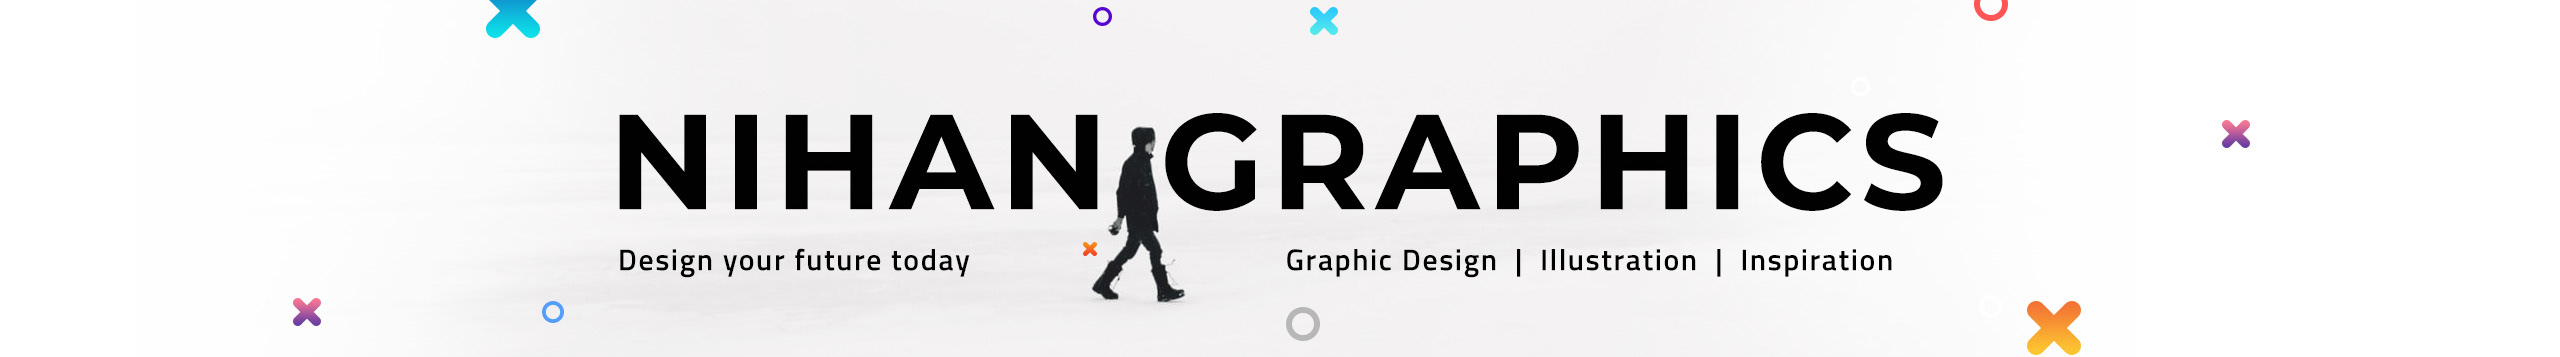 Nihan Graphics's profile banner